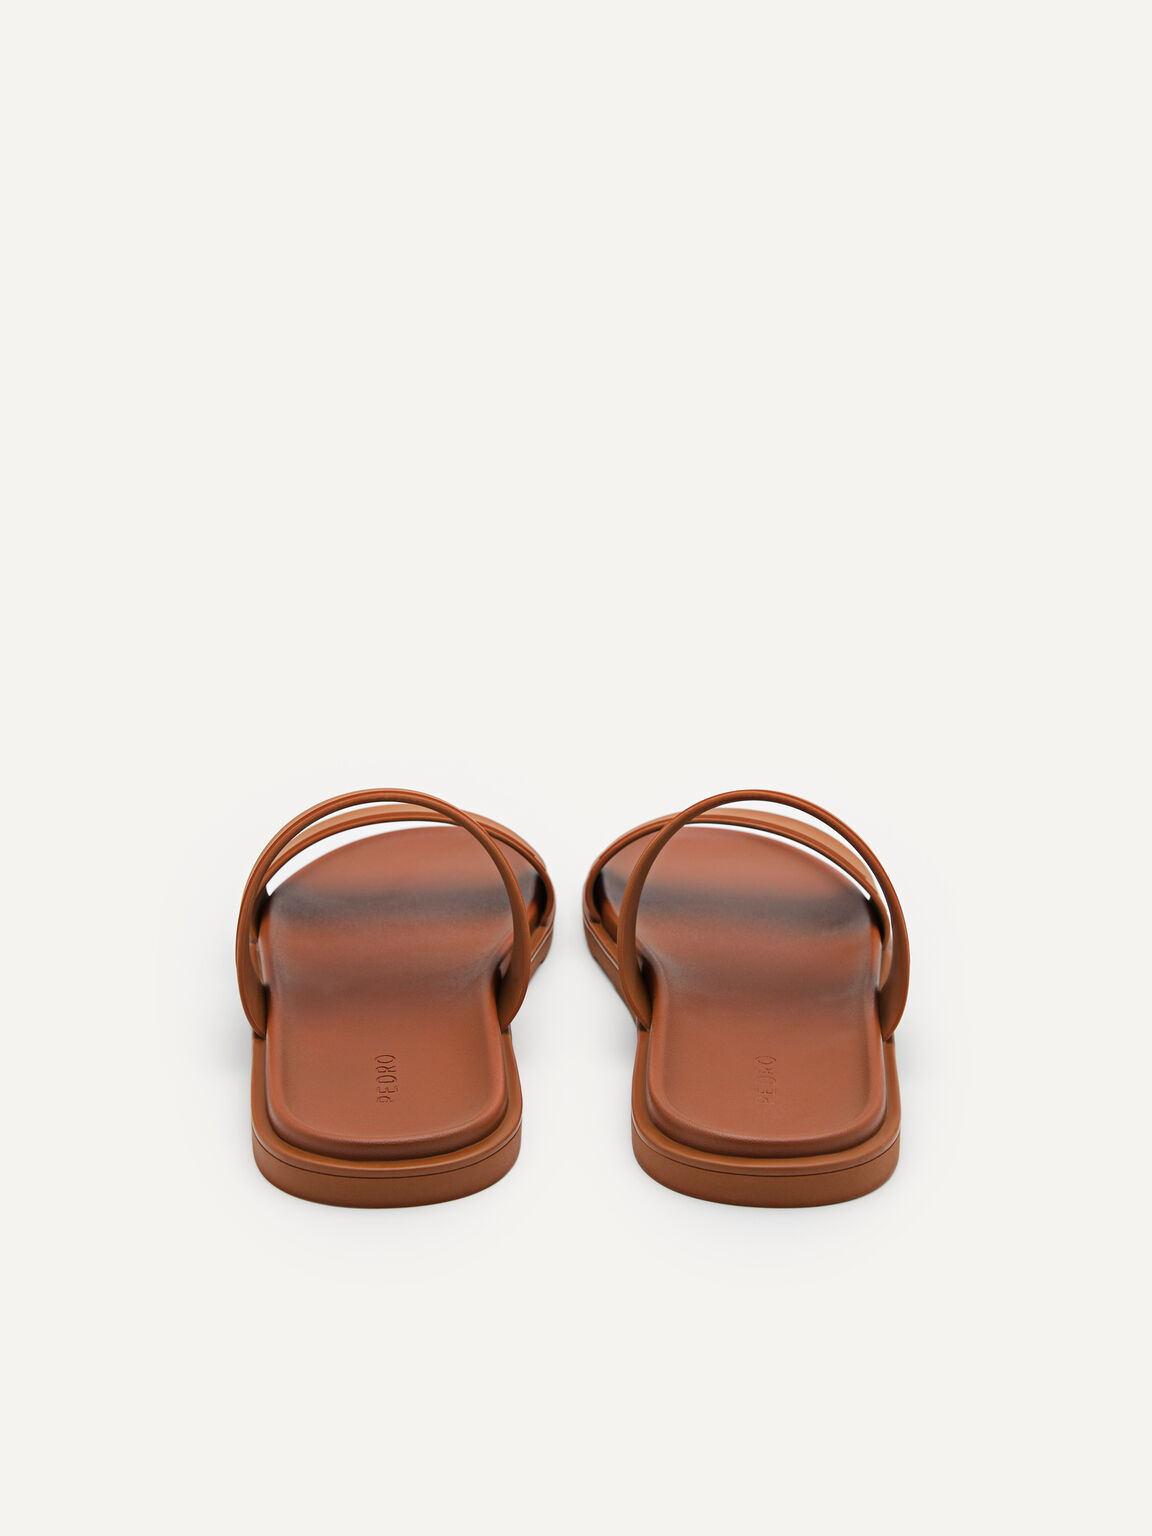 Pascal Slide Sandals, Cognac, hi-res